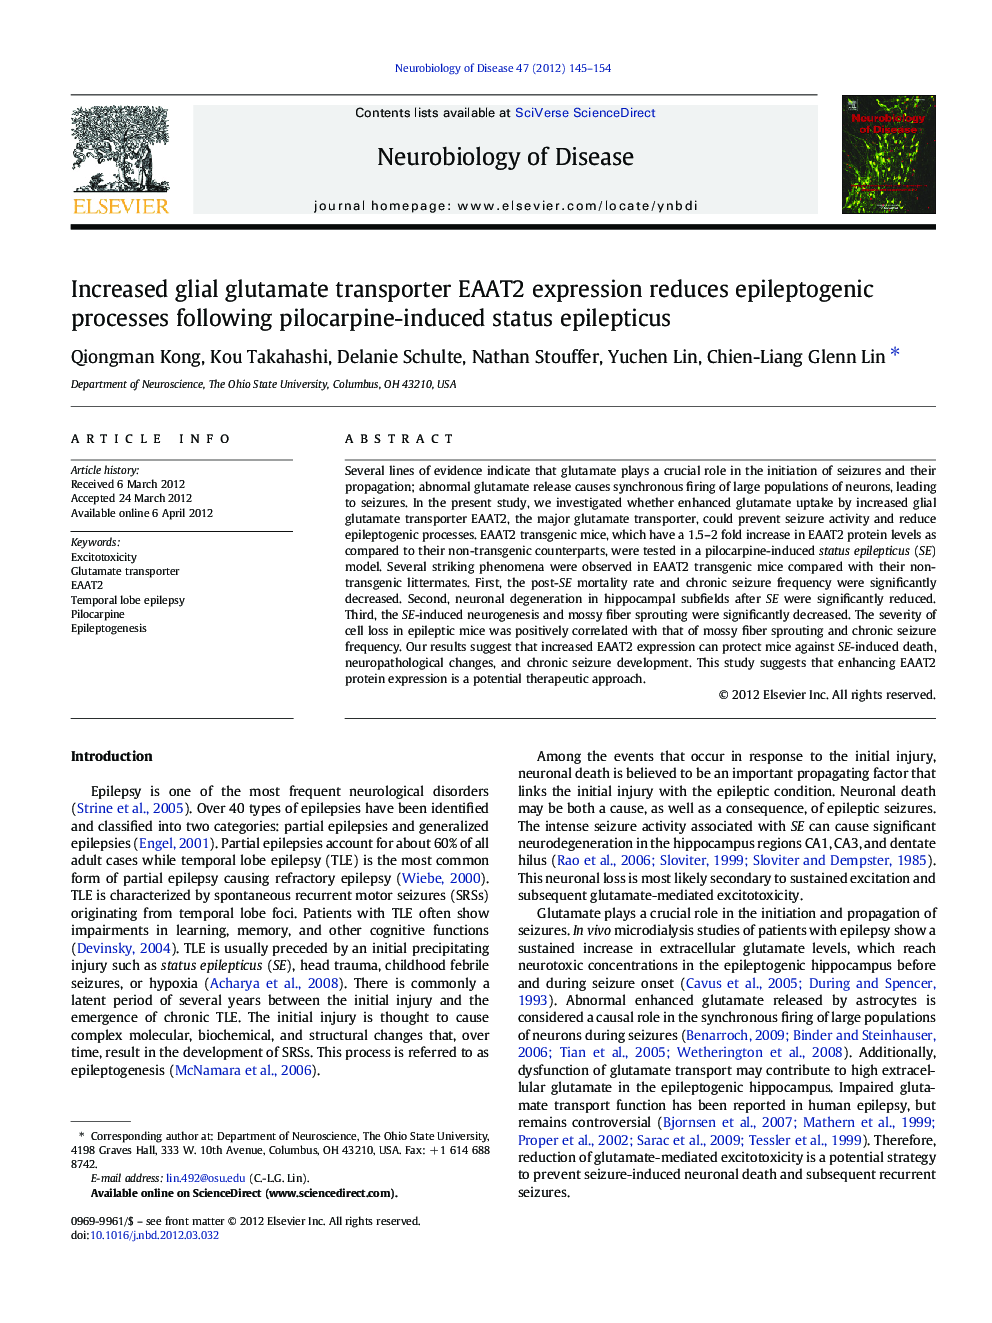 Increased glial glutamate transporter EAAT2 expression reduces epileptogenic processes following pilocarpine-induced status epilepticus